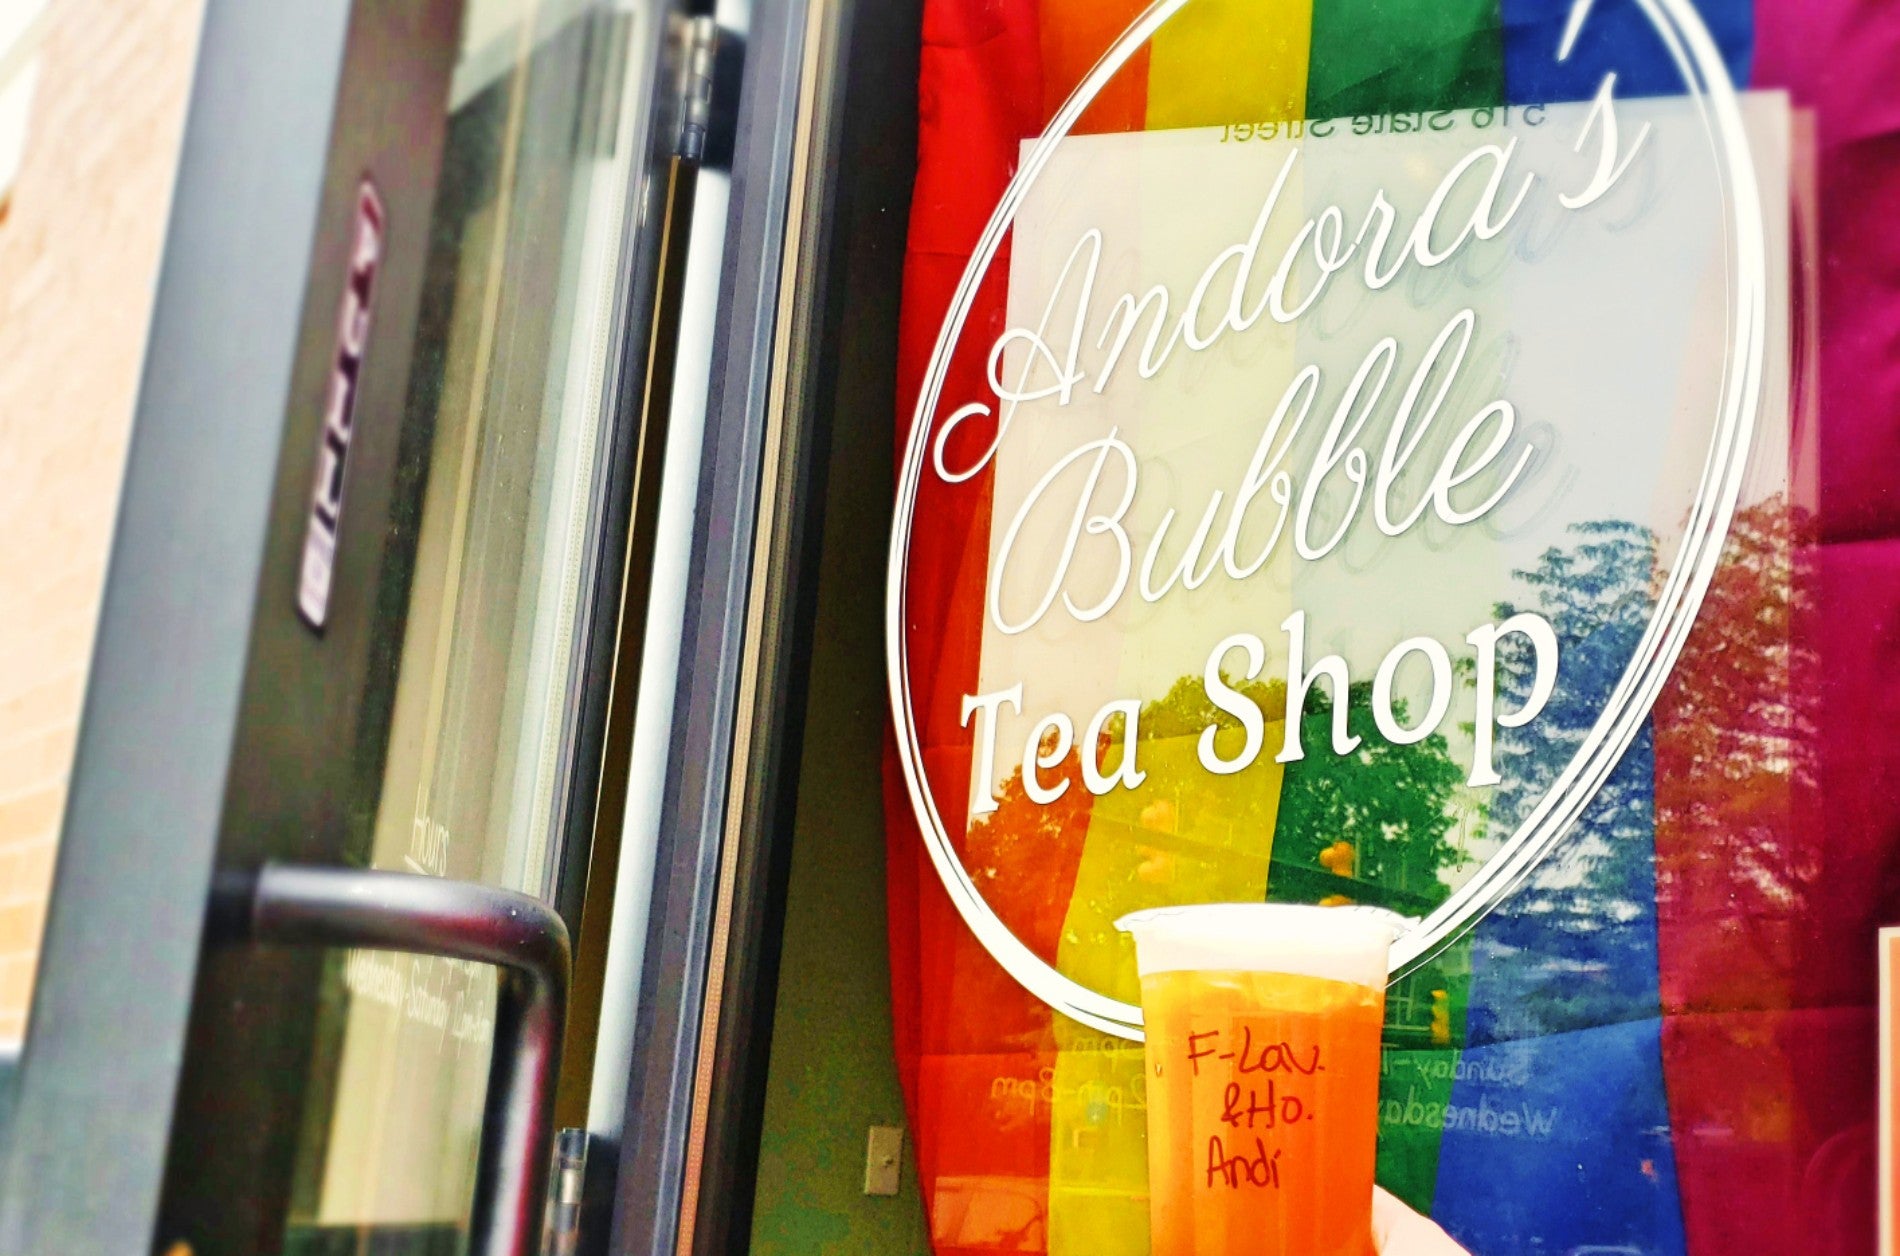 Fruit & Milk Teas  Andora's Bubble Tea Shop